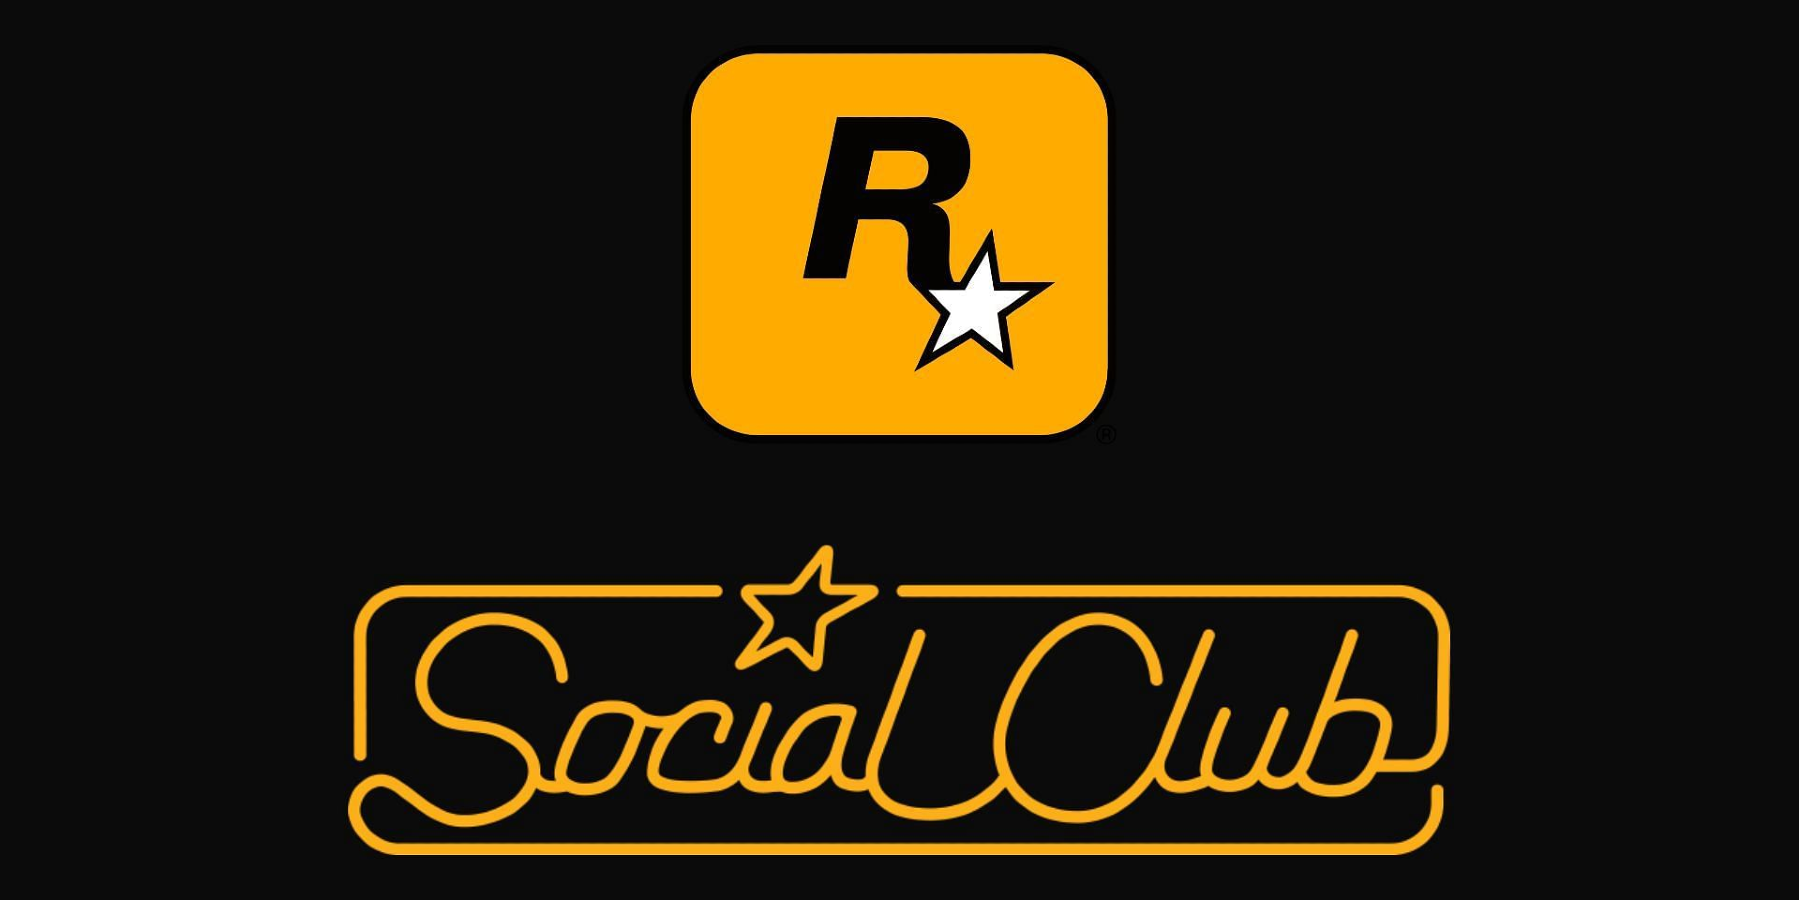 Rockstar May Be Ending Its Social Club Ahead of GTA 6